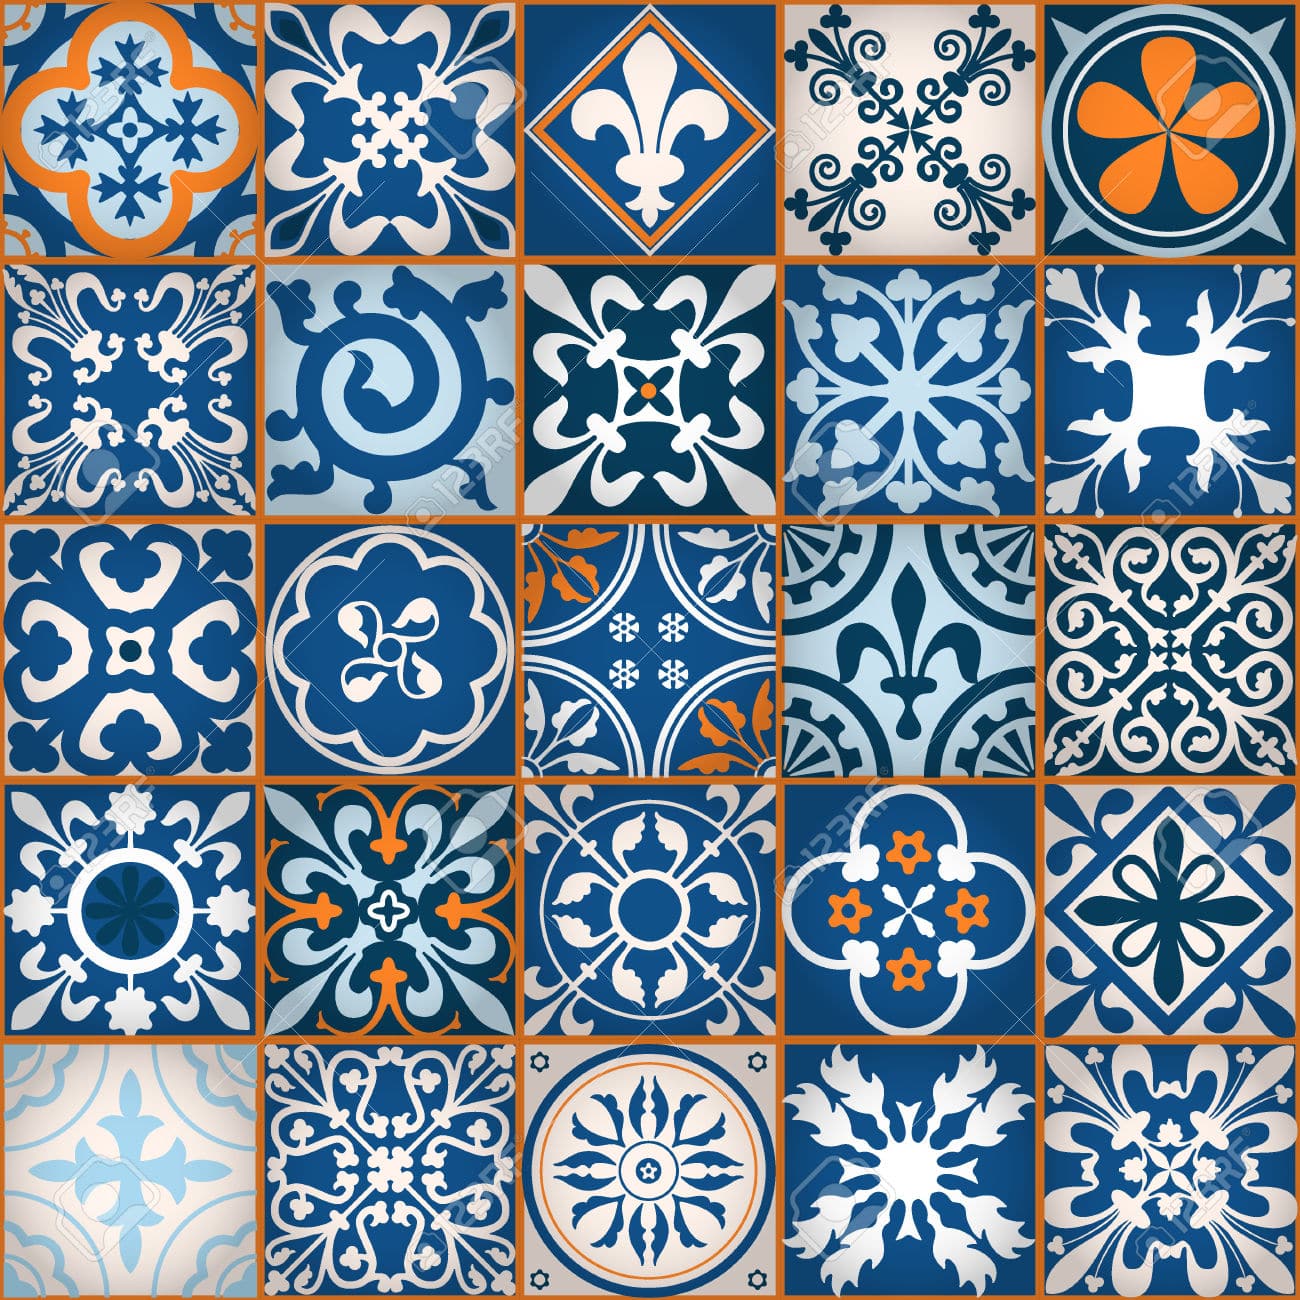 Moroccan tiles – The Ceramic School